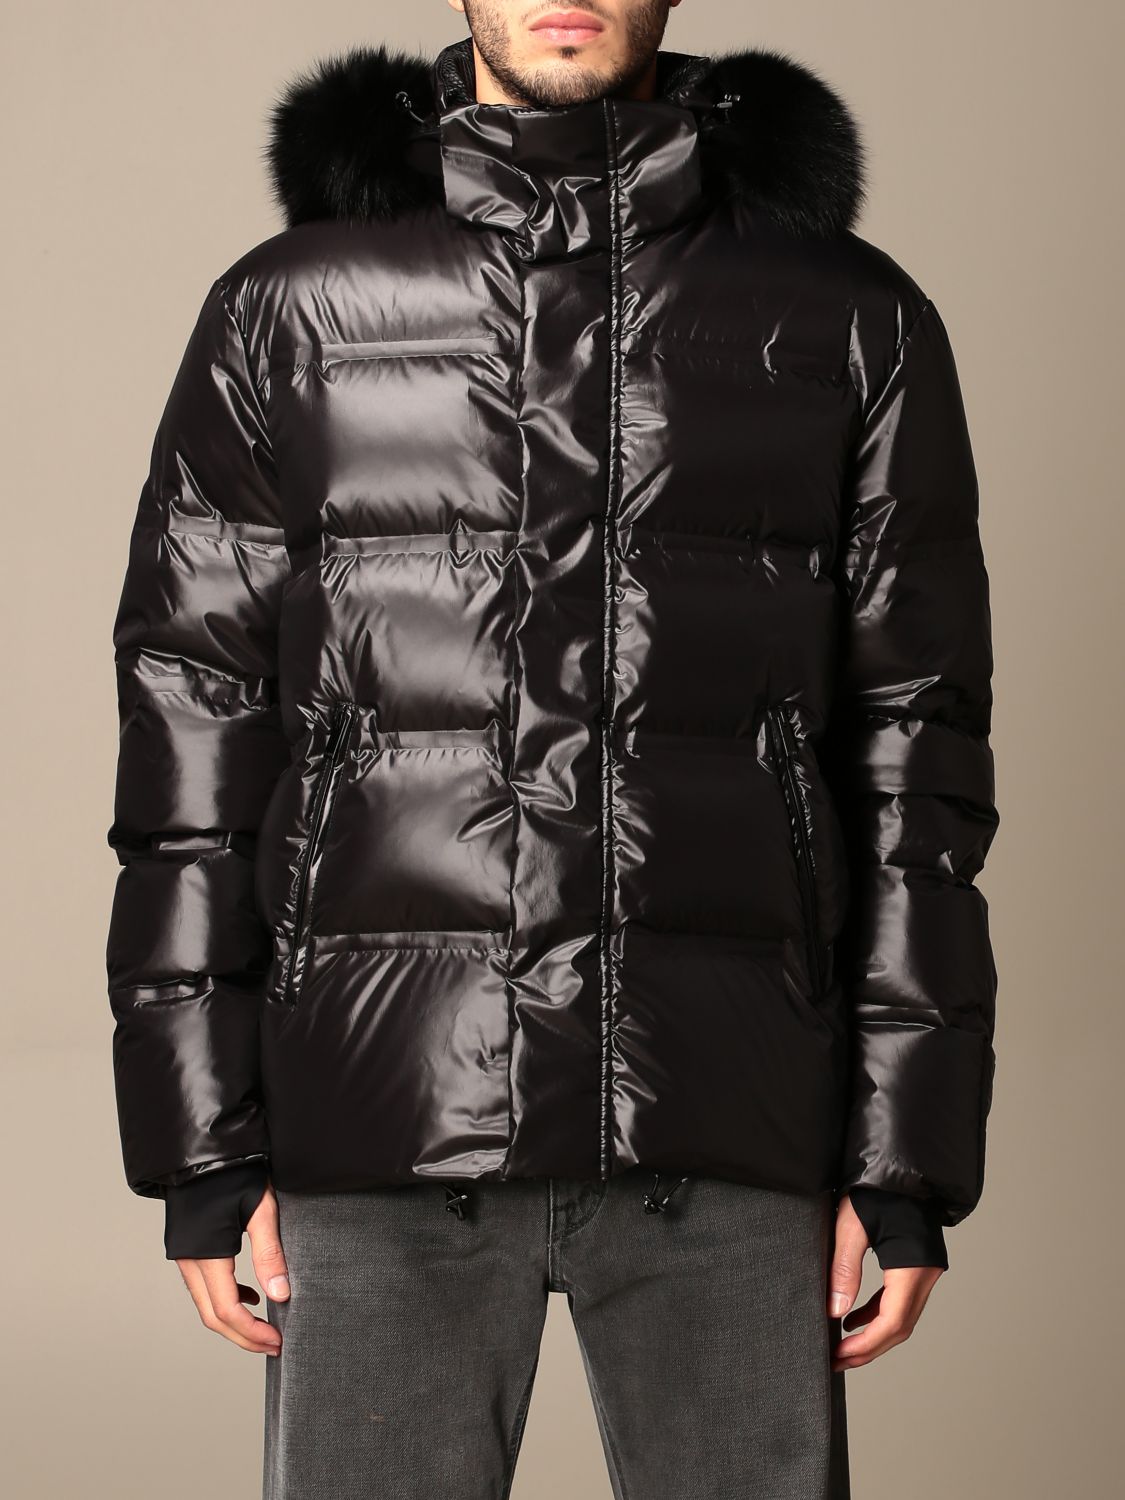 FENDI: down jacket in padded nylon with hood - Black | Fendi jacket ...